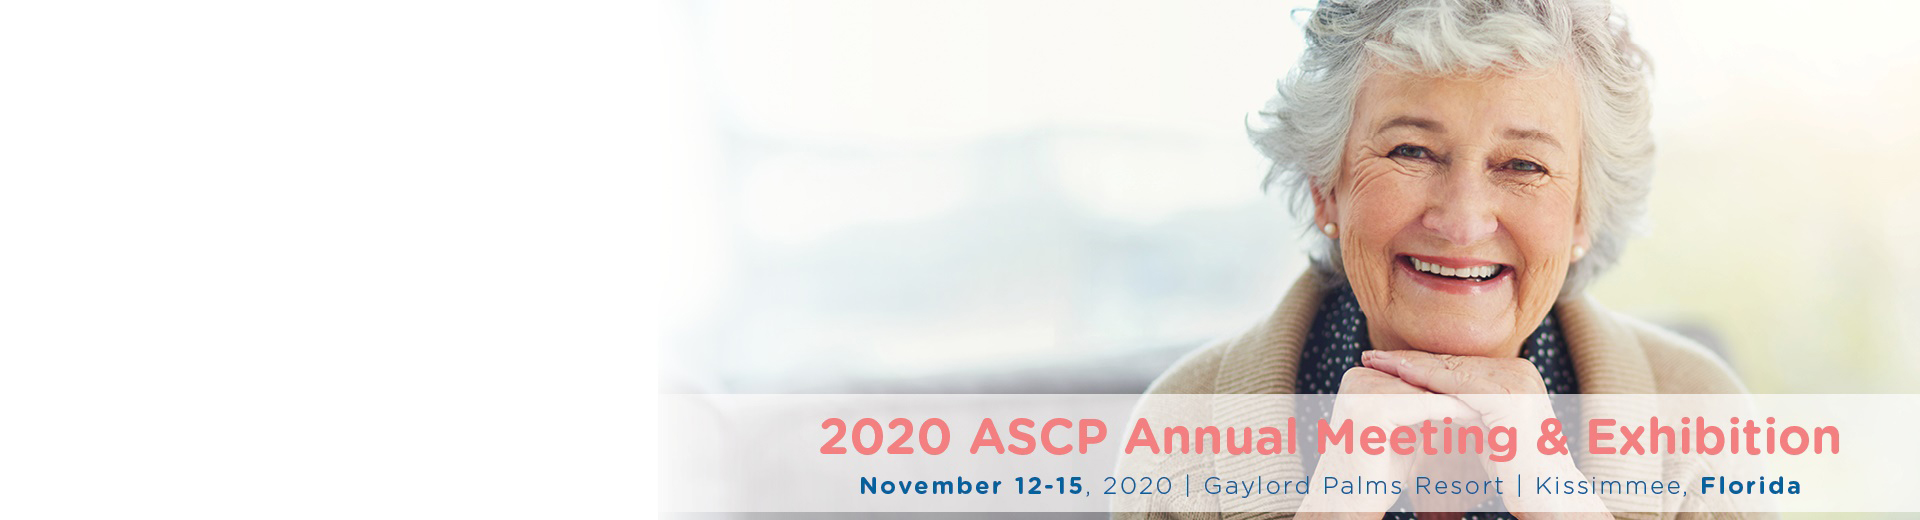 2020 ASCP Annual Meeting & Exhibition